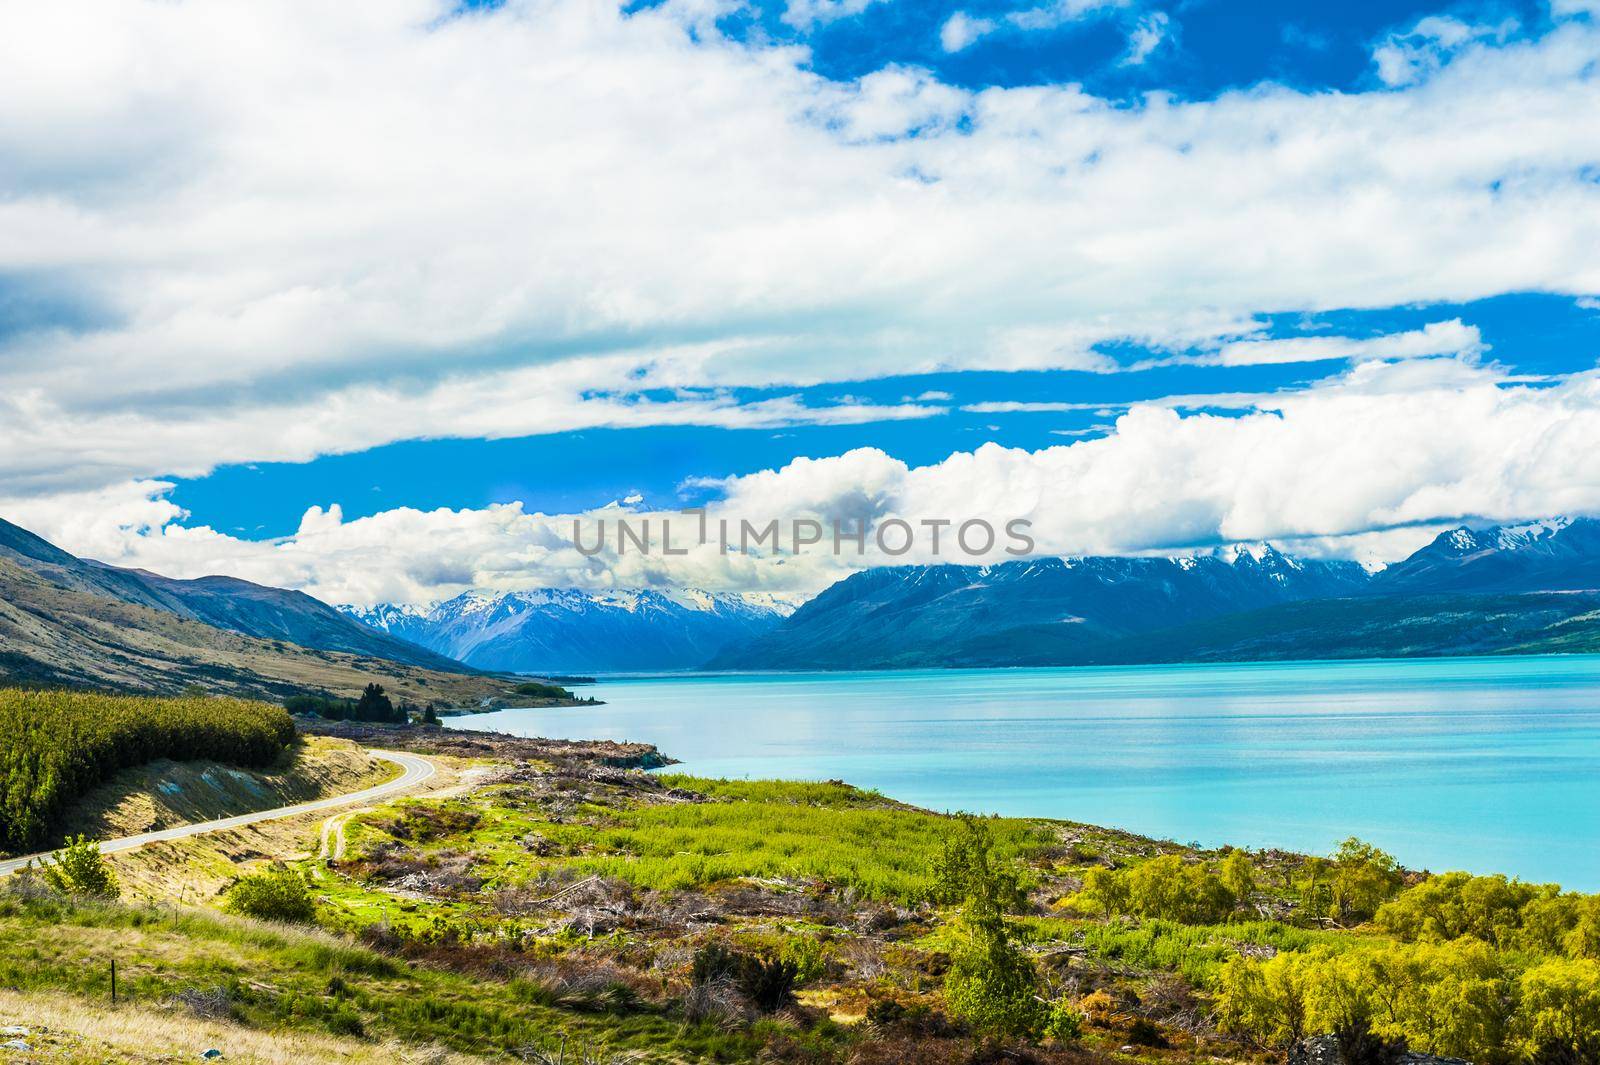 Lake Pukaki in New Zealand by fyletto